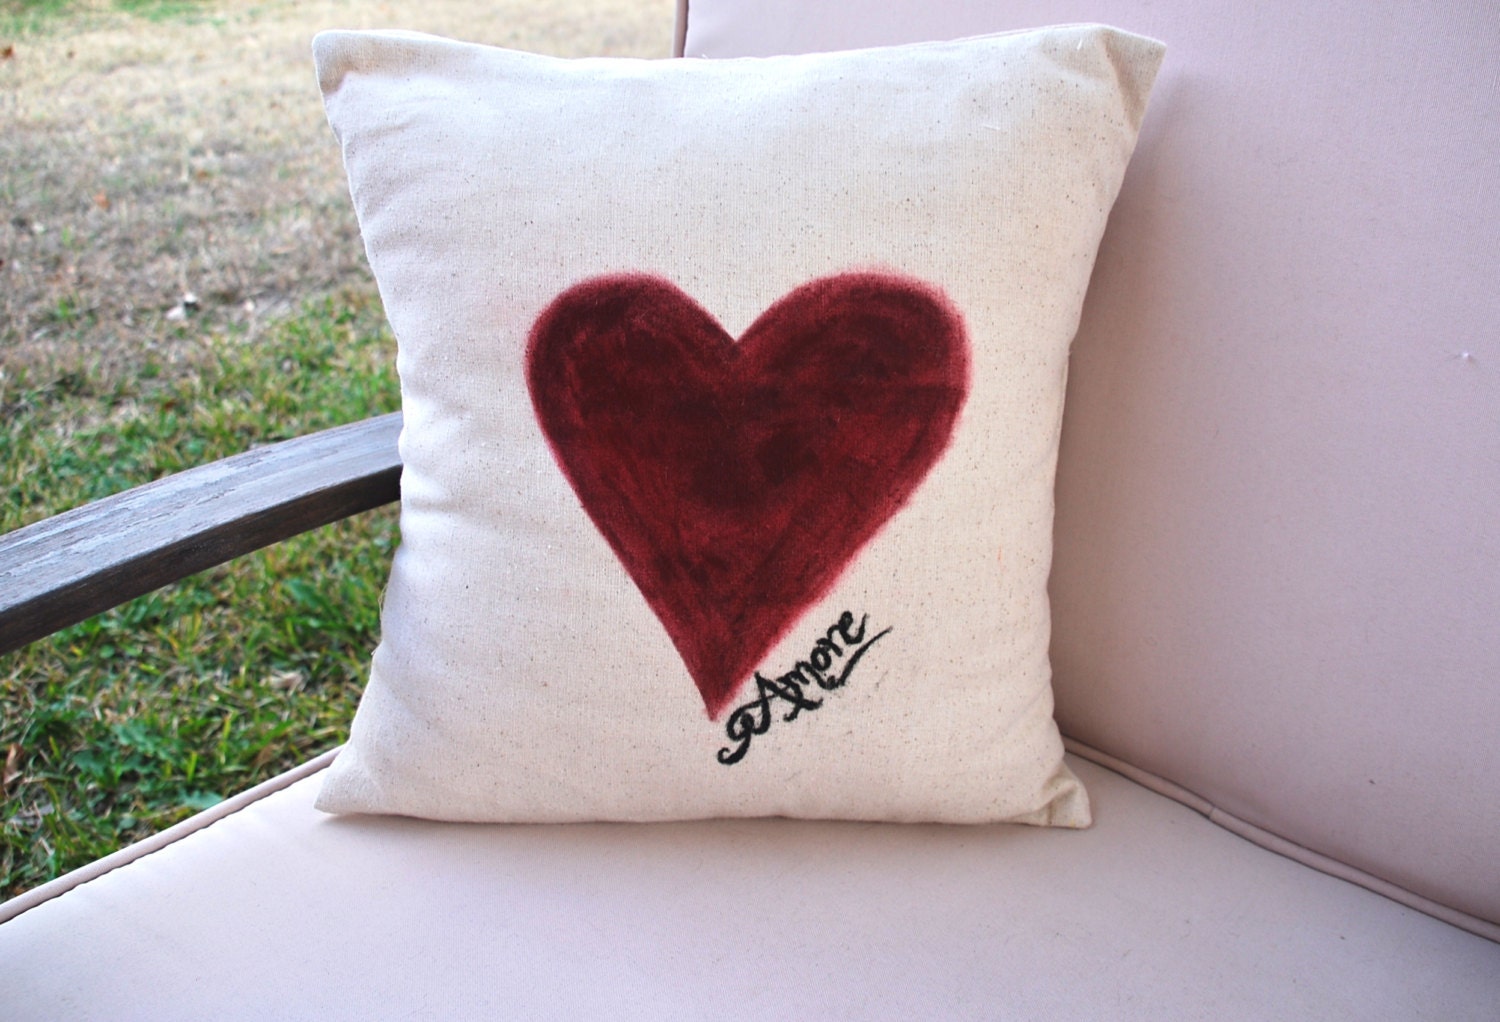 Heart - Amore - Wedding - Anniversary - Hand Painted - Throw Pillow - Toss Pillow - Accent Pillow 14"x14"